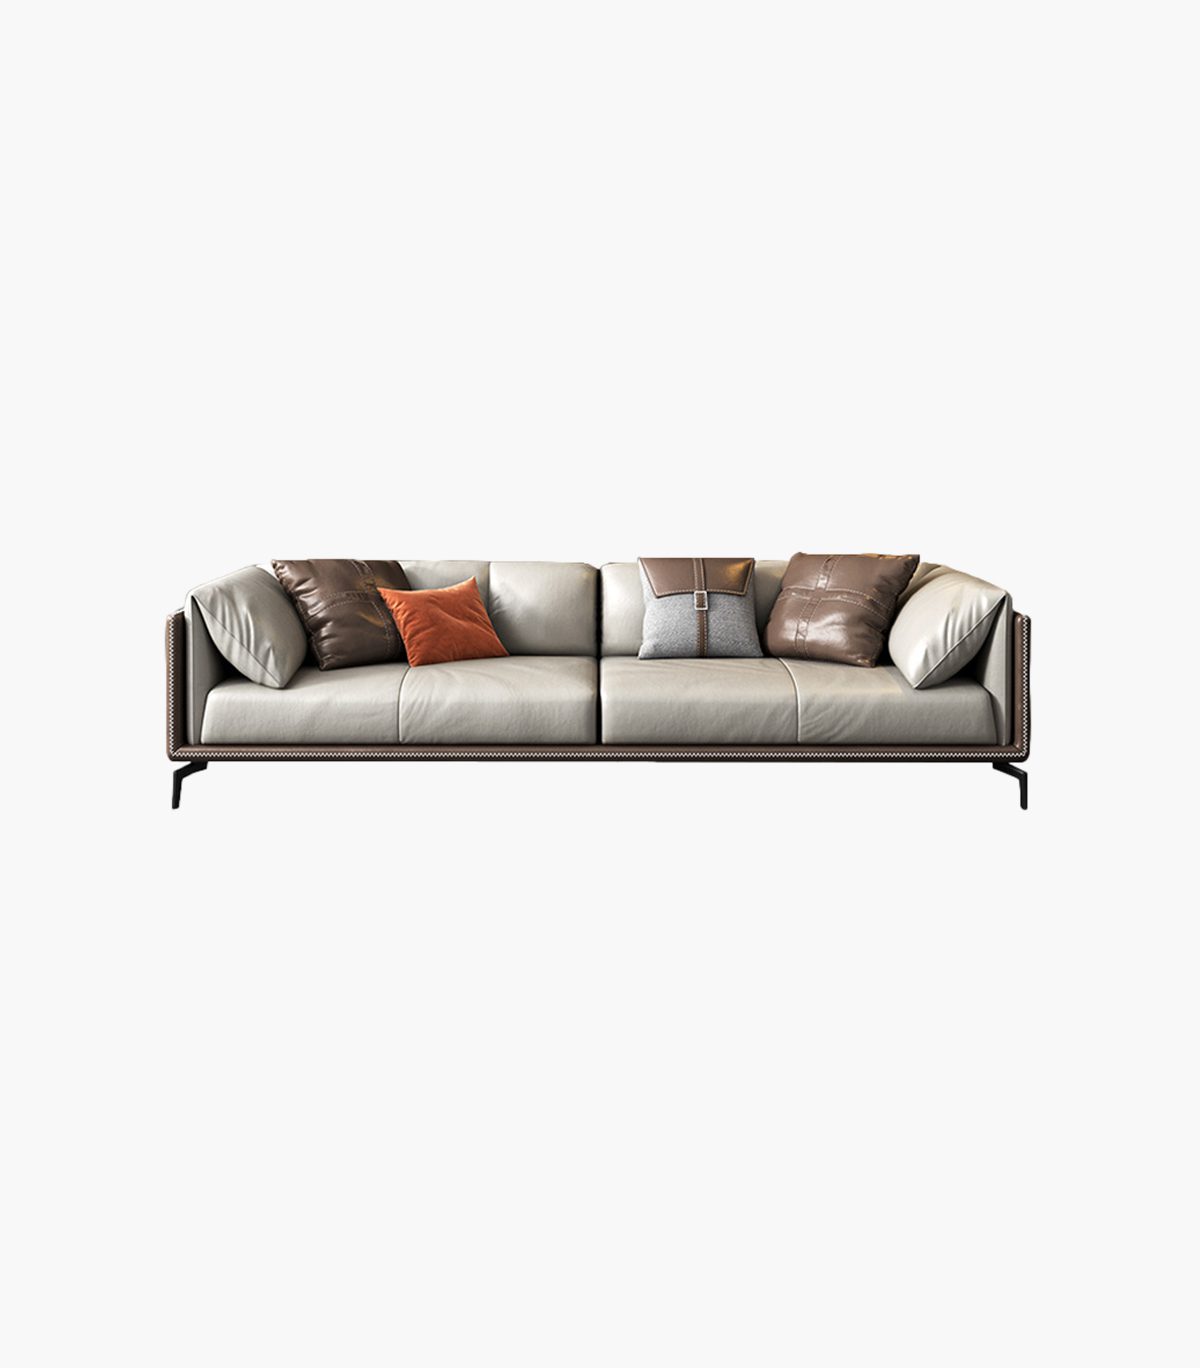 MITCHELL WRIGHT Sofa 4-Seater